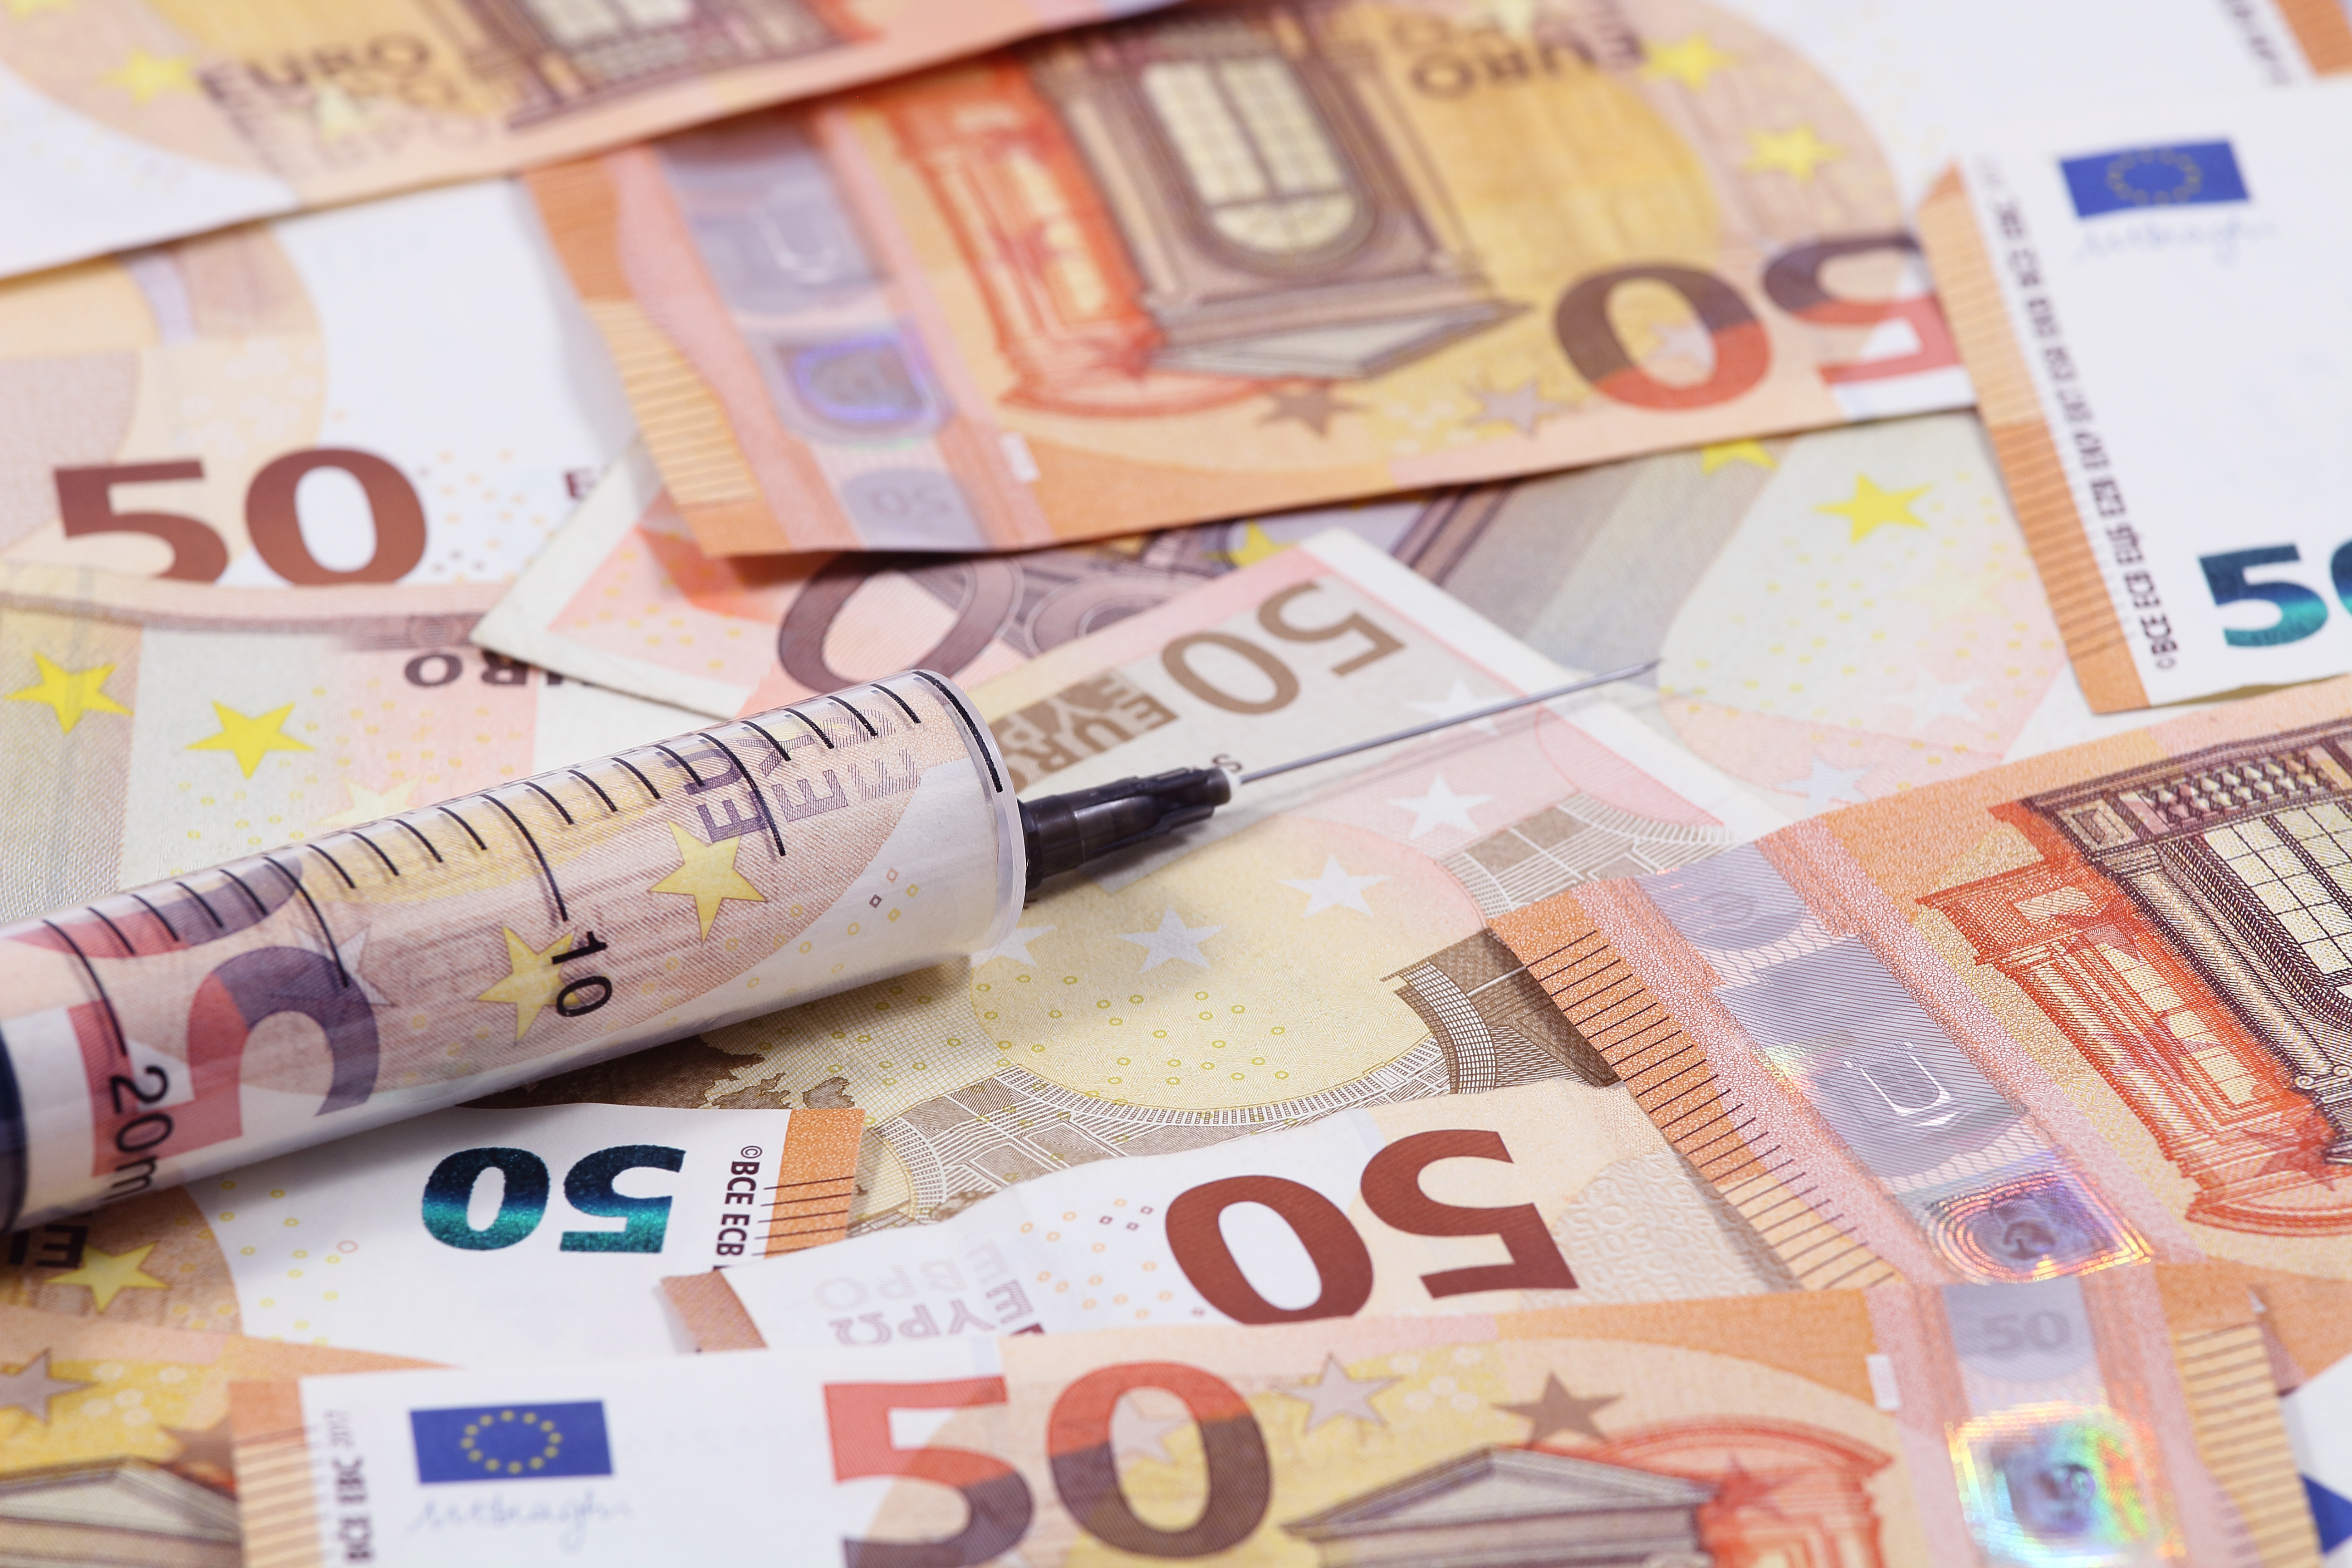 În plin scandal politic, euro a atins un nou maxim istoric